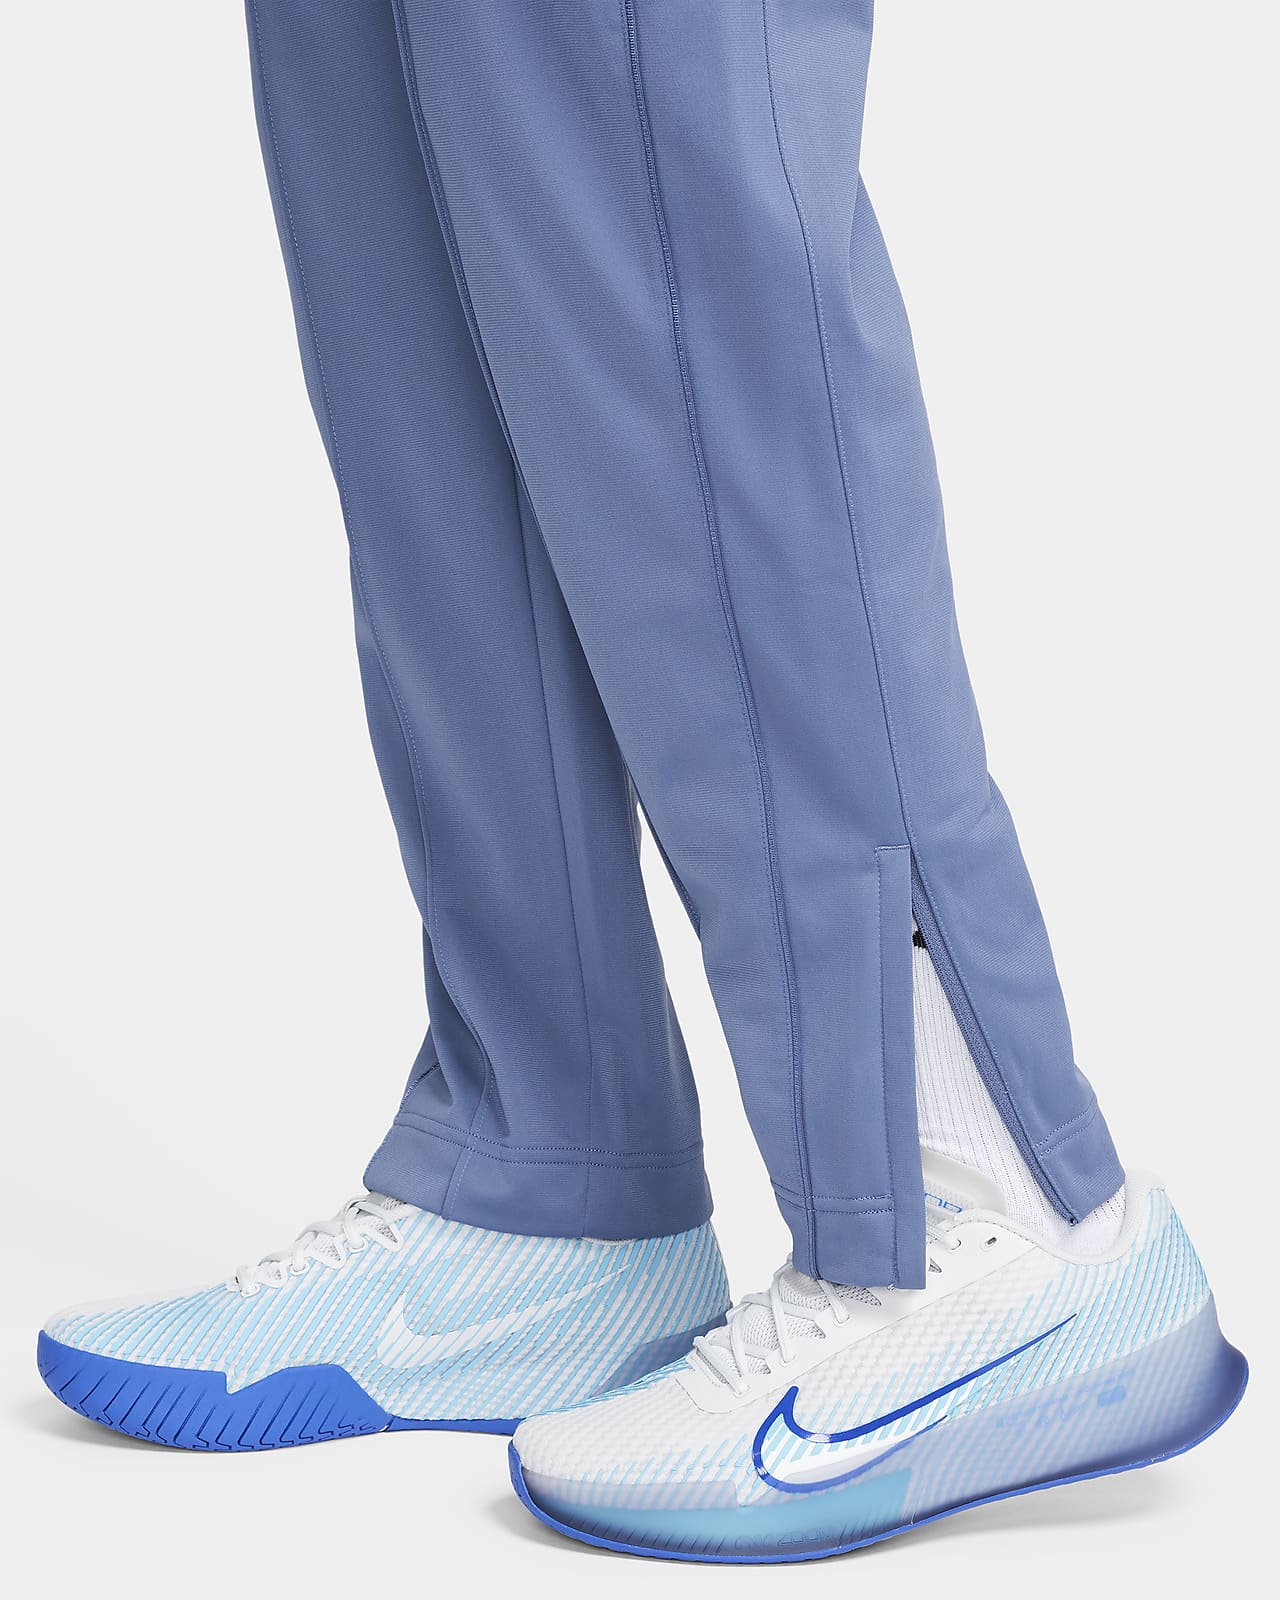 Nike sz XL Women's TENNIS Pants NikeCourt Dry w Zip @ Ankles NEW $80  831205-100